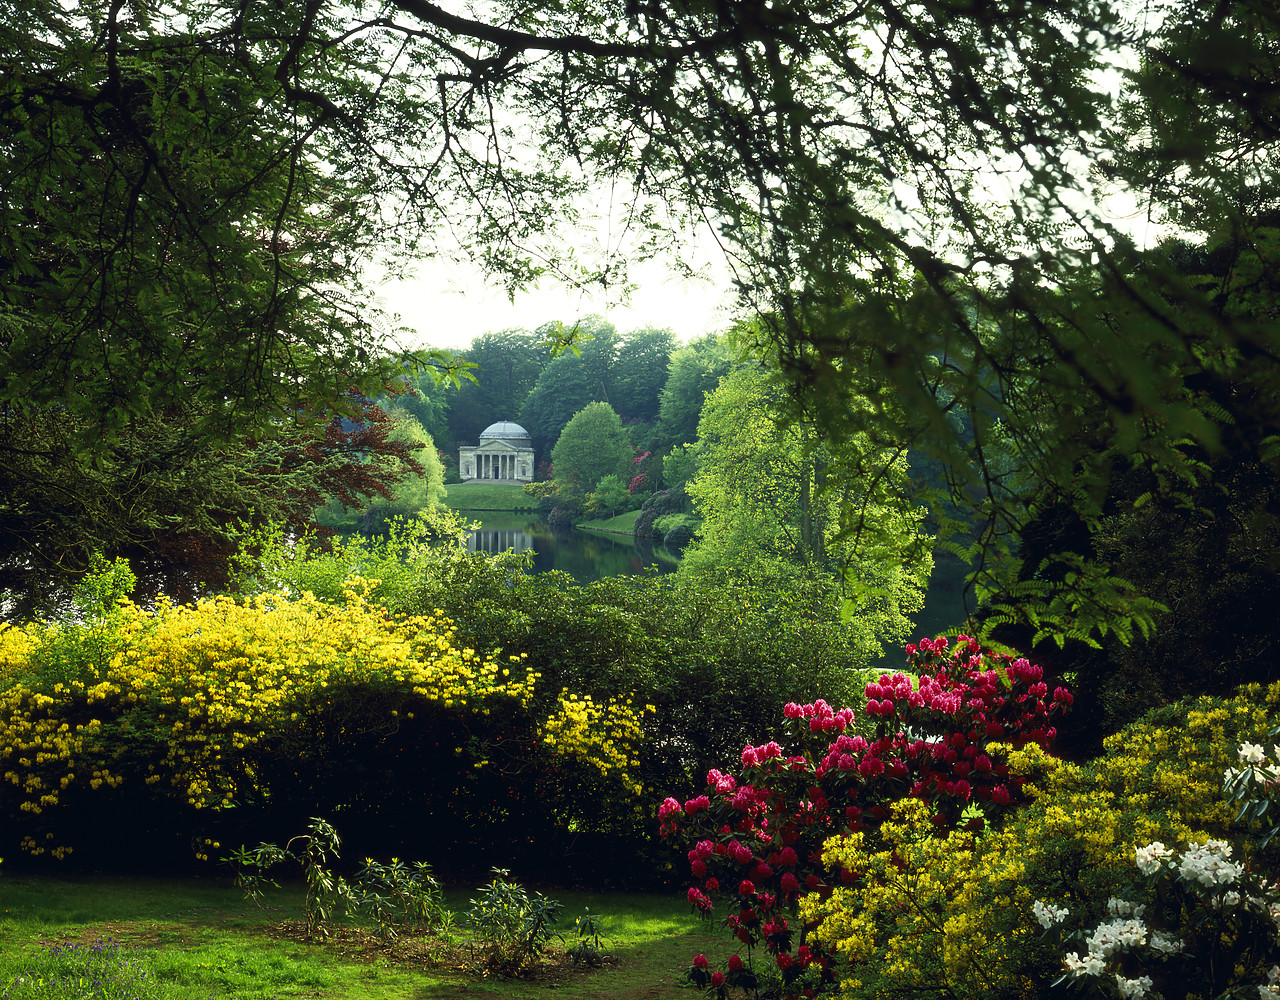 #87893-1 - Stourhead Gardens in Spring, Wiltshire, England